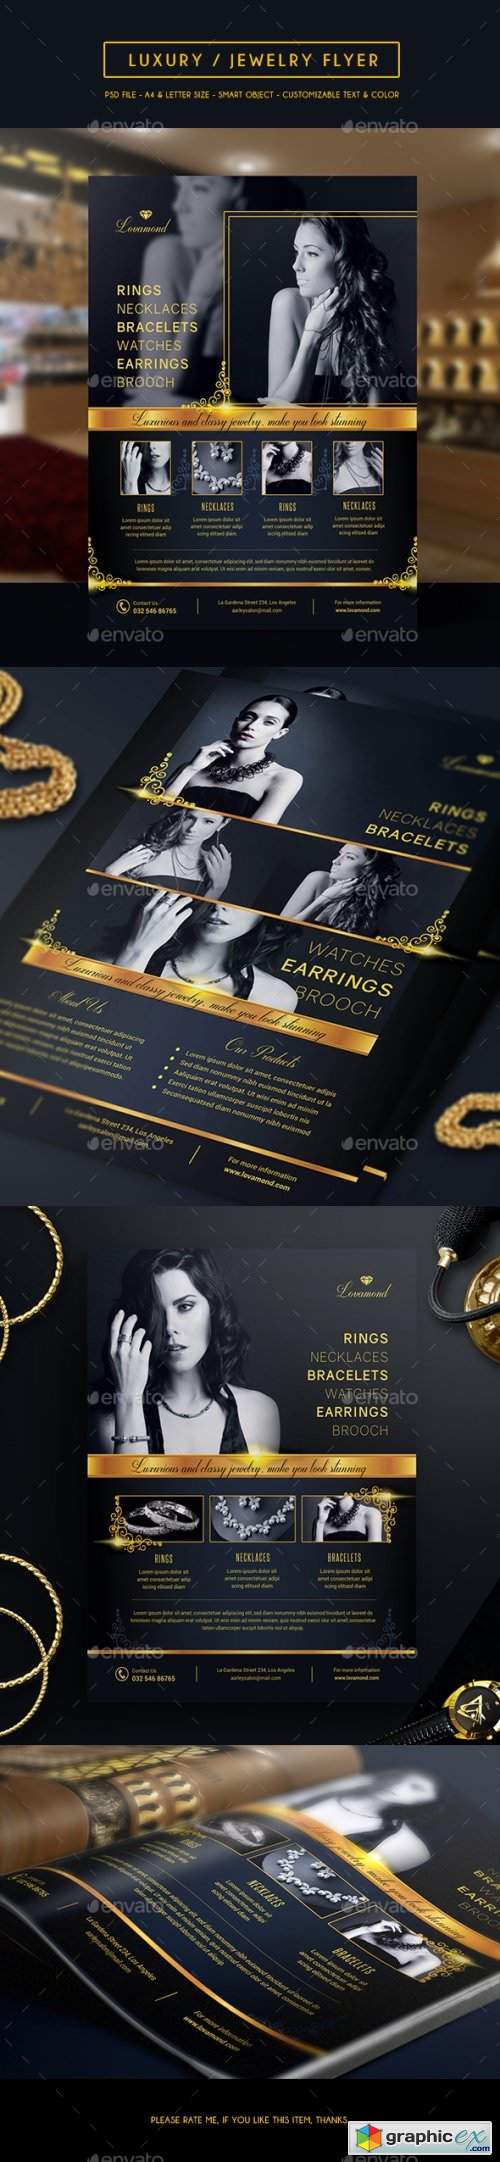 Luxury/Jewelry Store Flyer